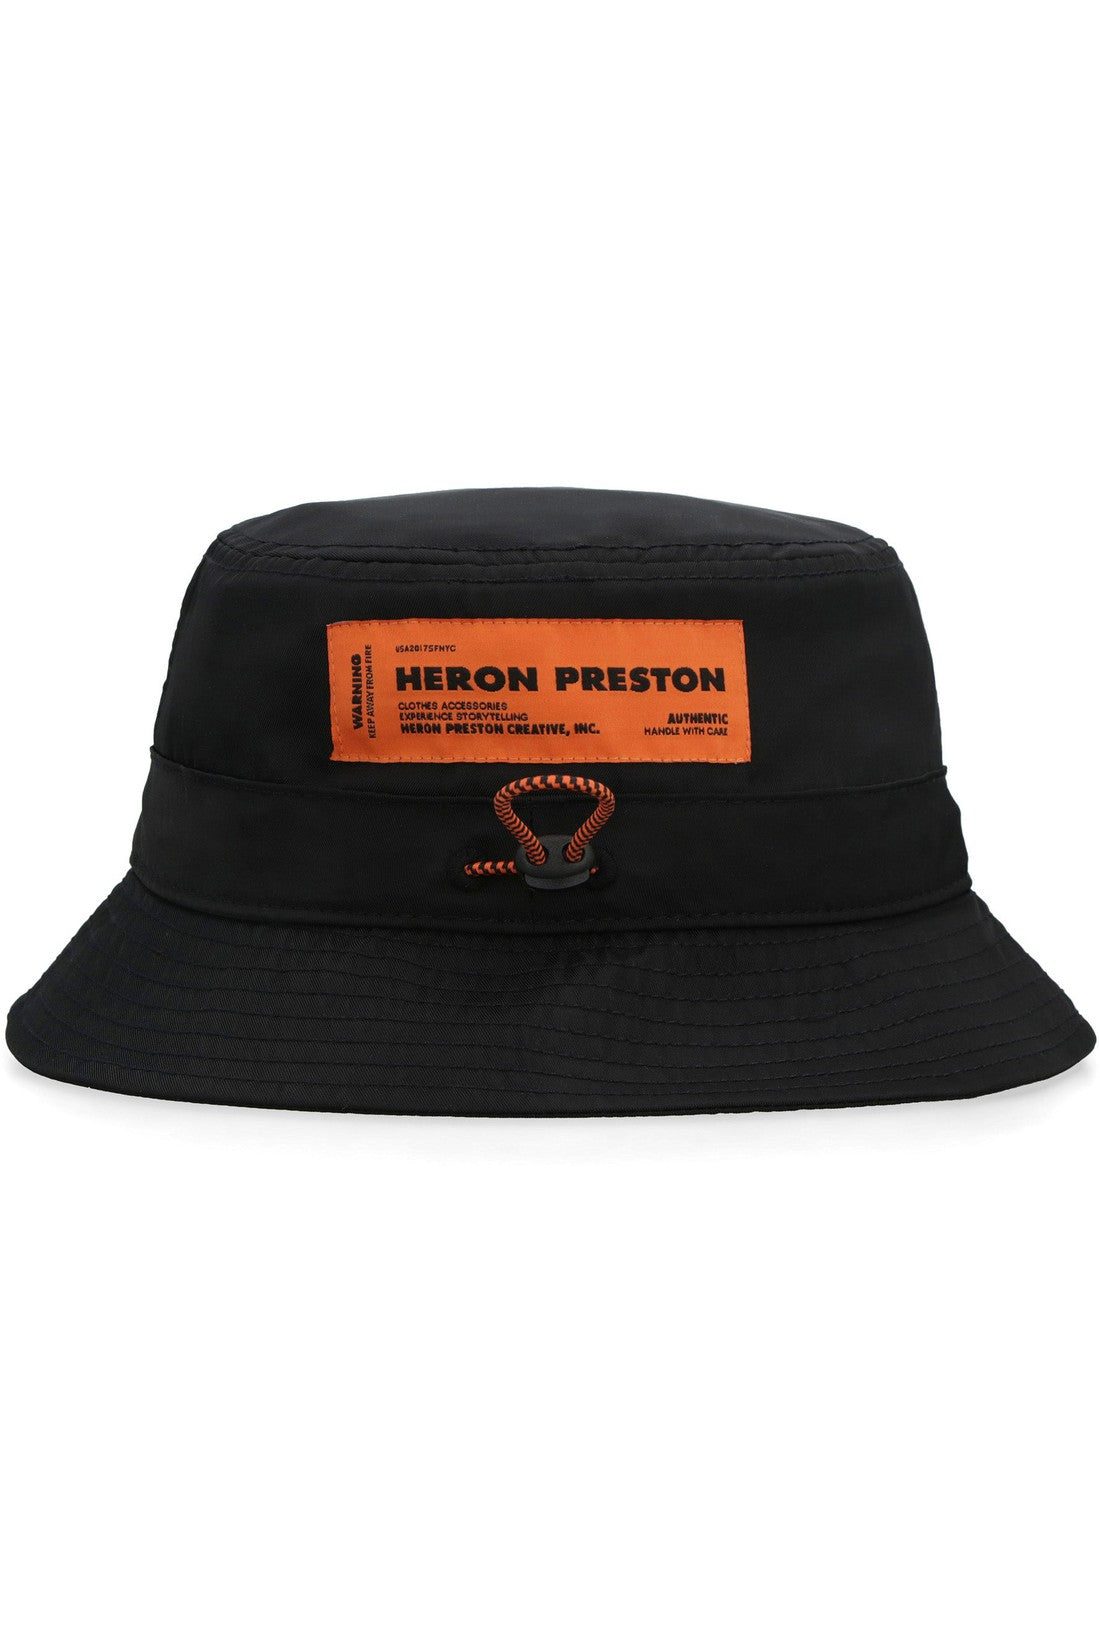 Heron Preston-OUTLET-SALE-Bucket hat-ARCHIVIST